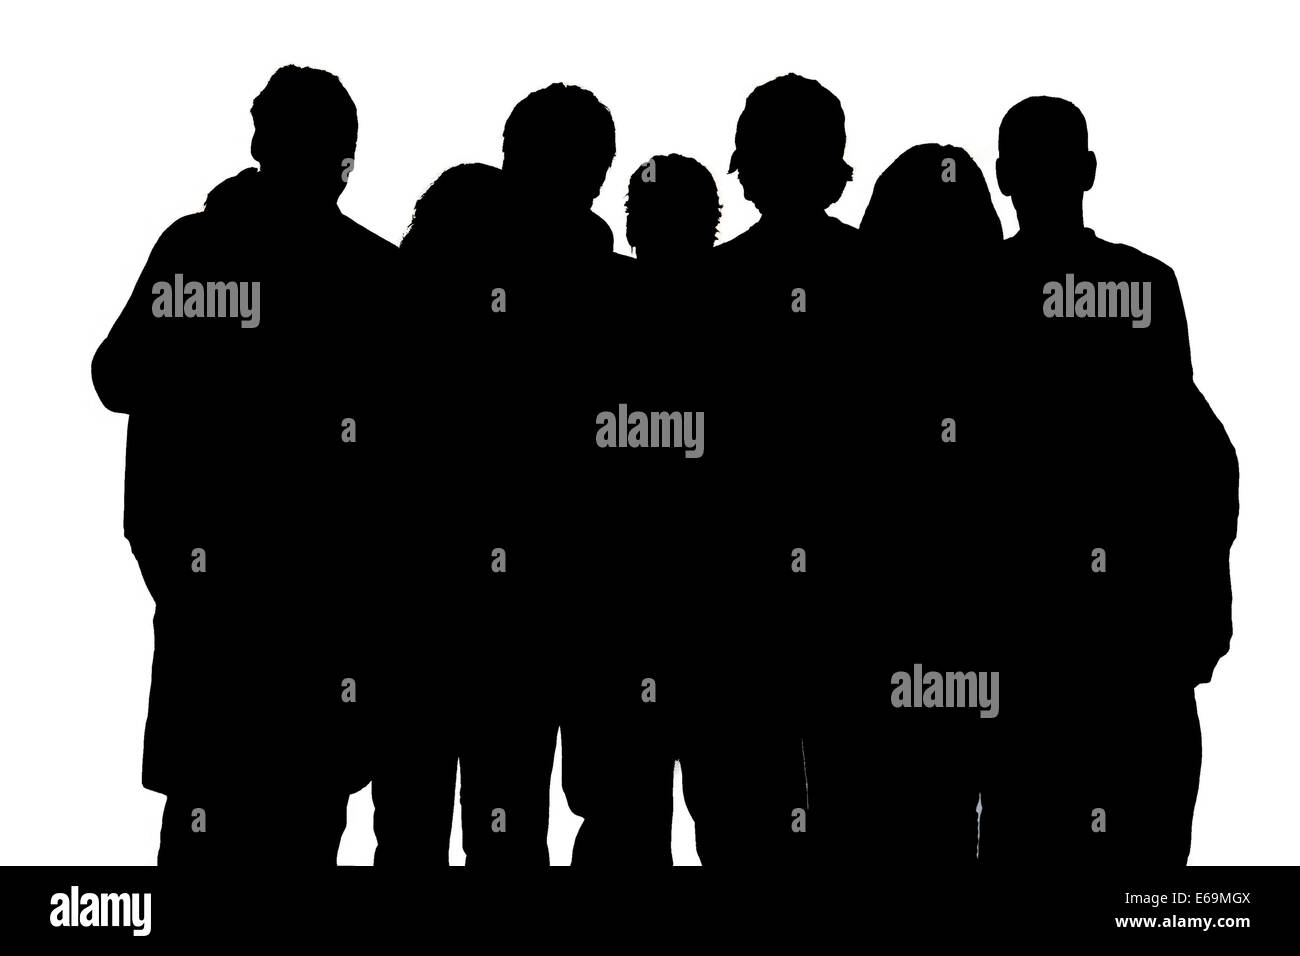 Grupo humano,silueta,en blanco y negro Foto de stock